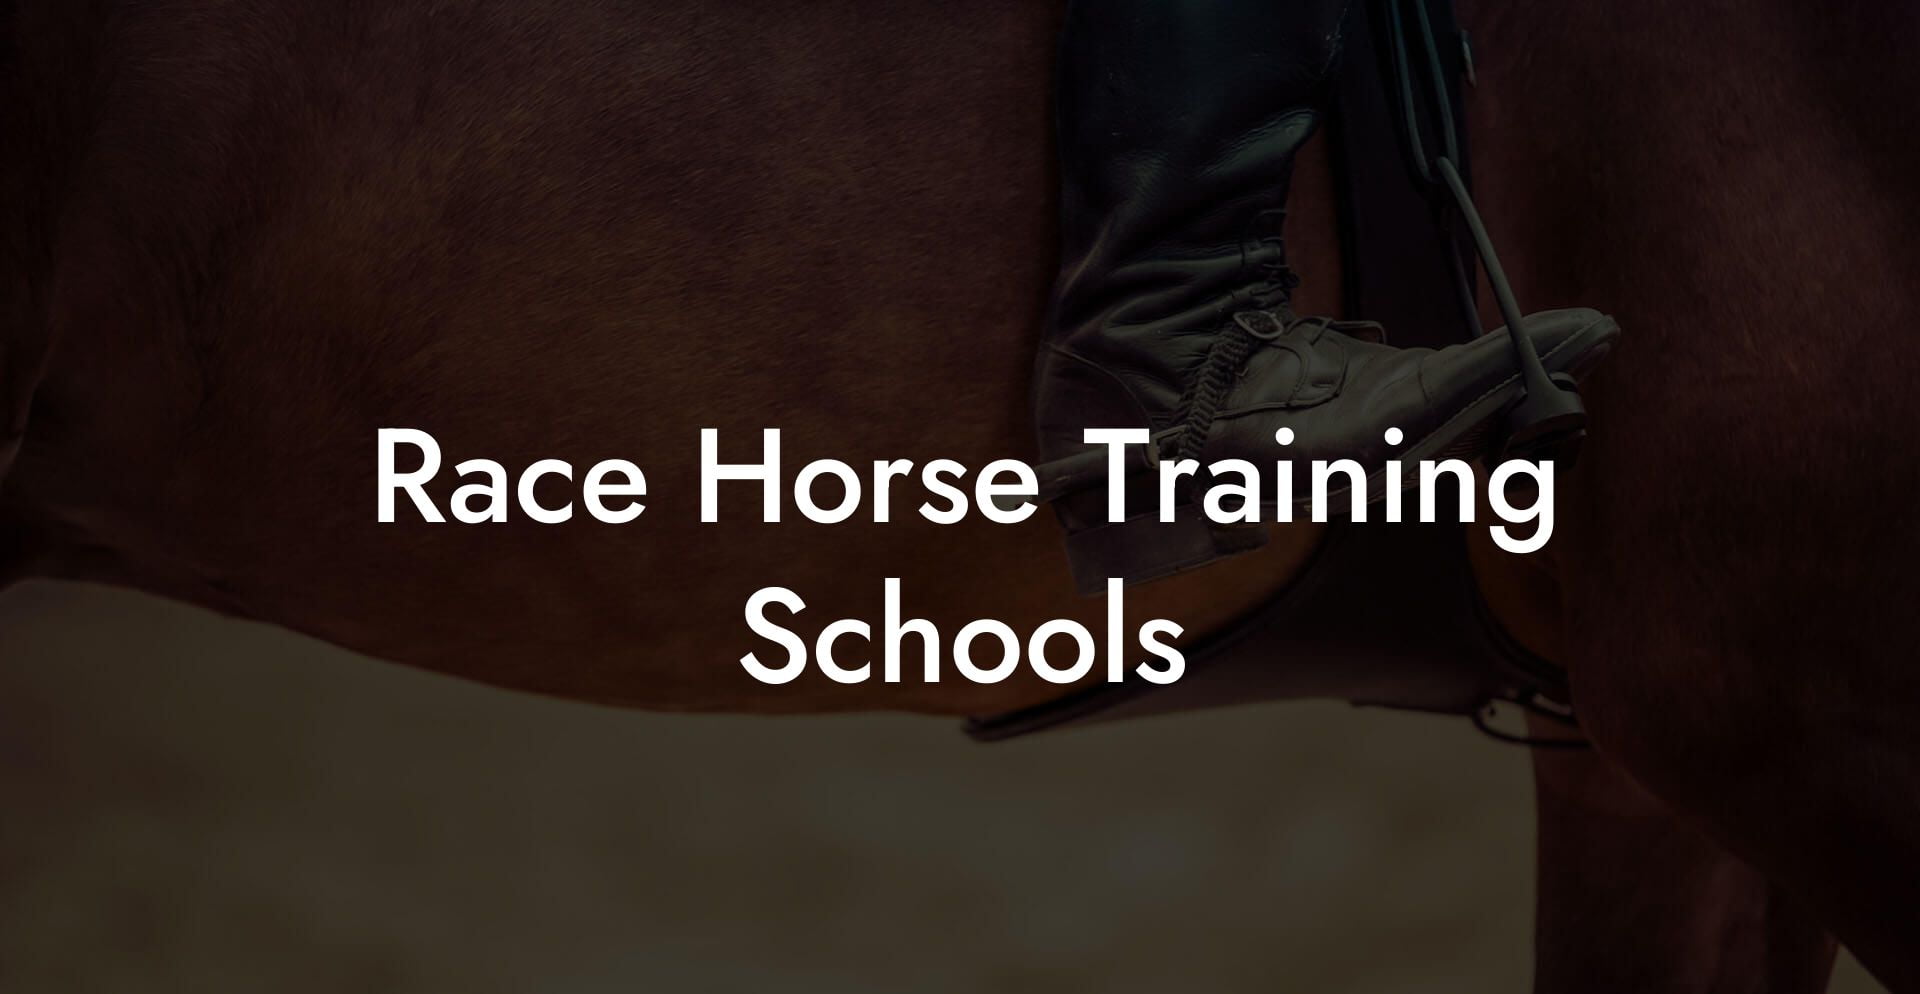 Race Horse Training Schools